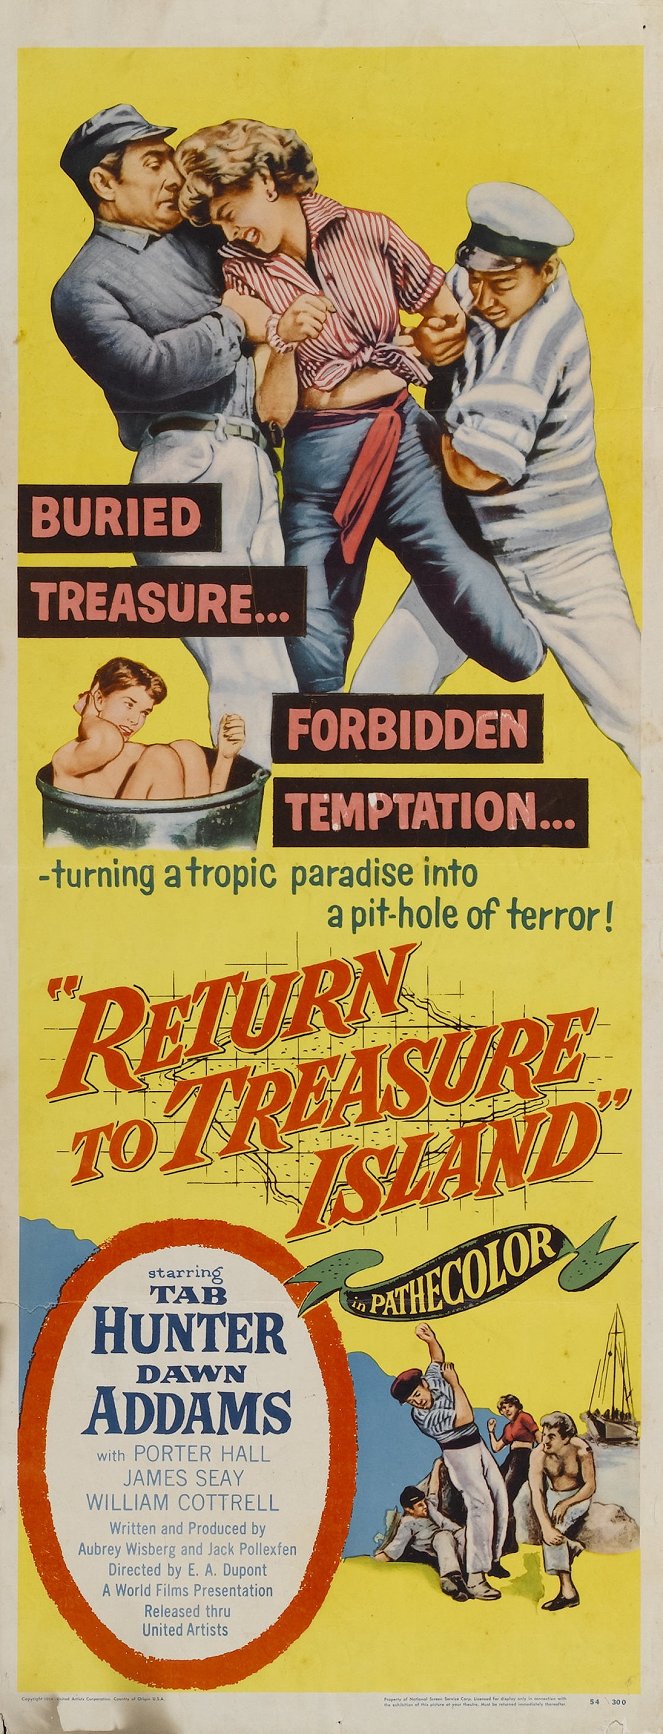 Return to Treasure Island - Posters